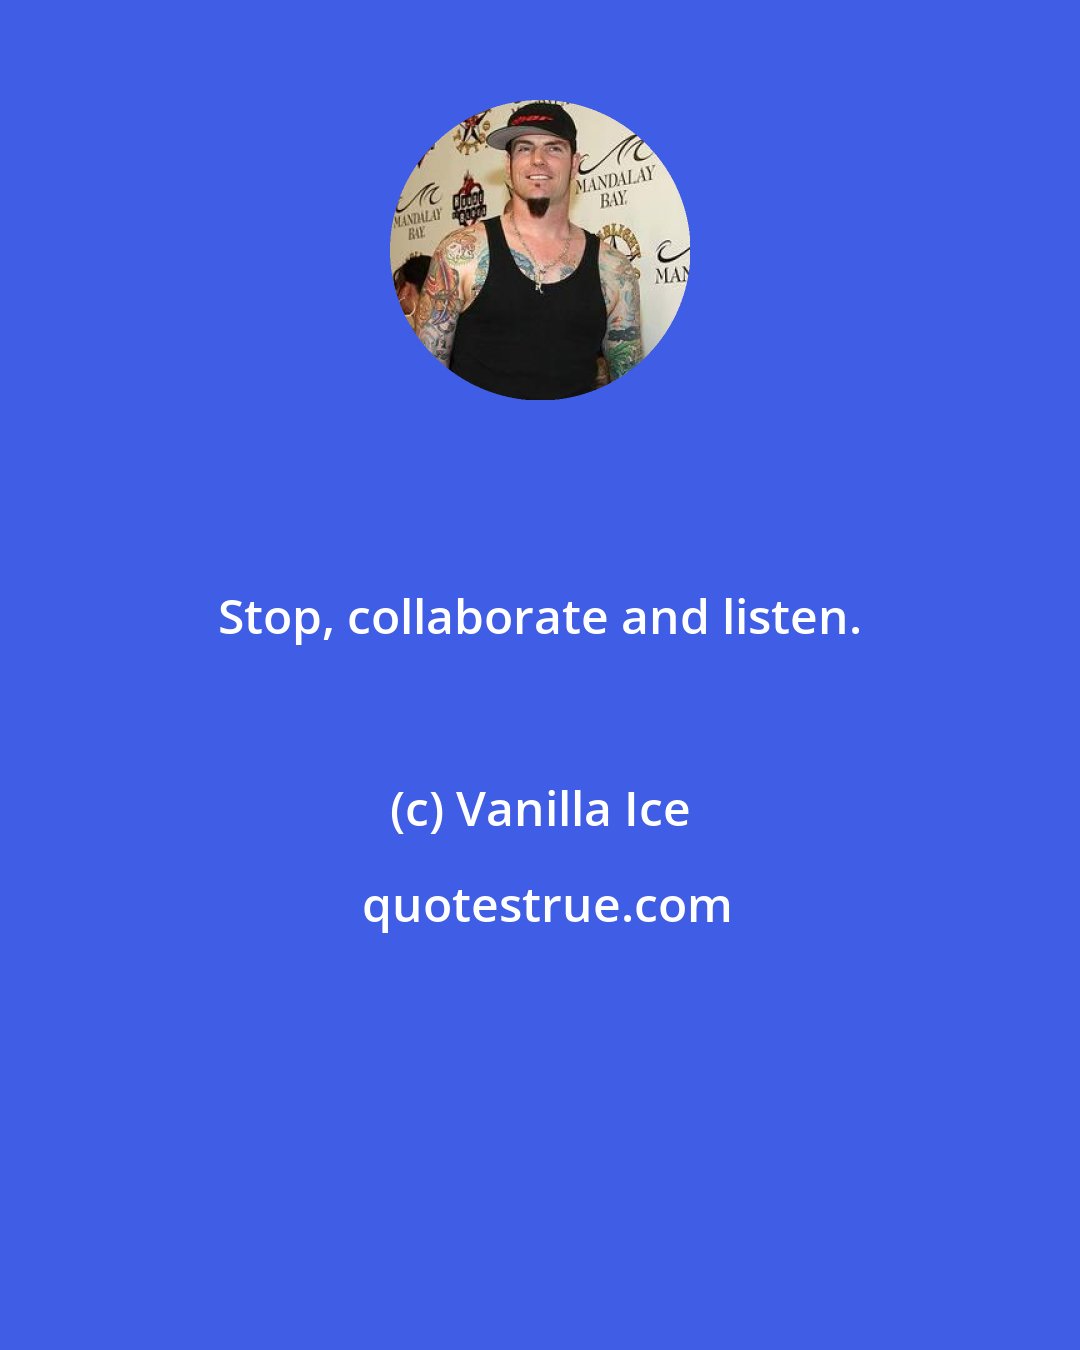 Vanilla Ice: Stop, collaborate and listen.